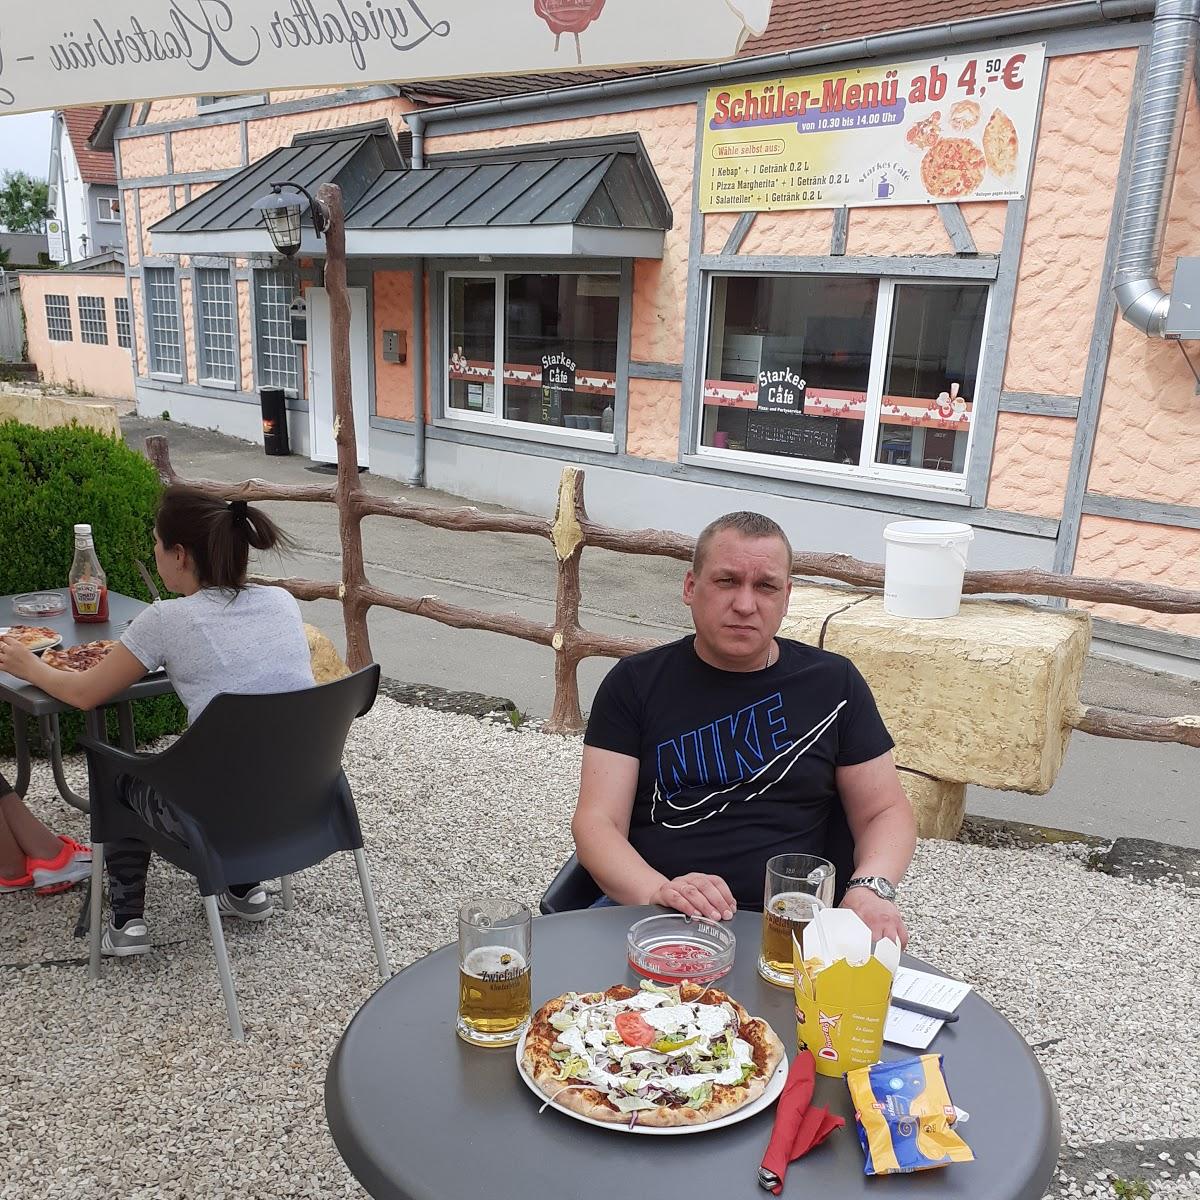 Restaurant "Starkes Café" in Hechingen